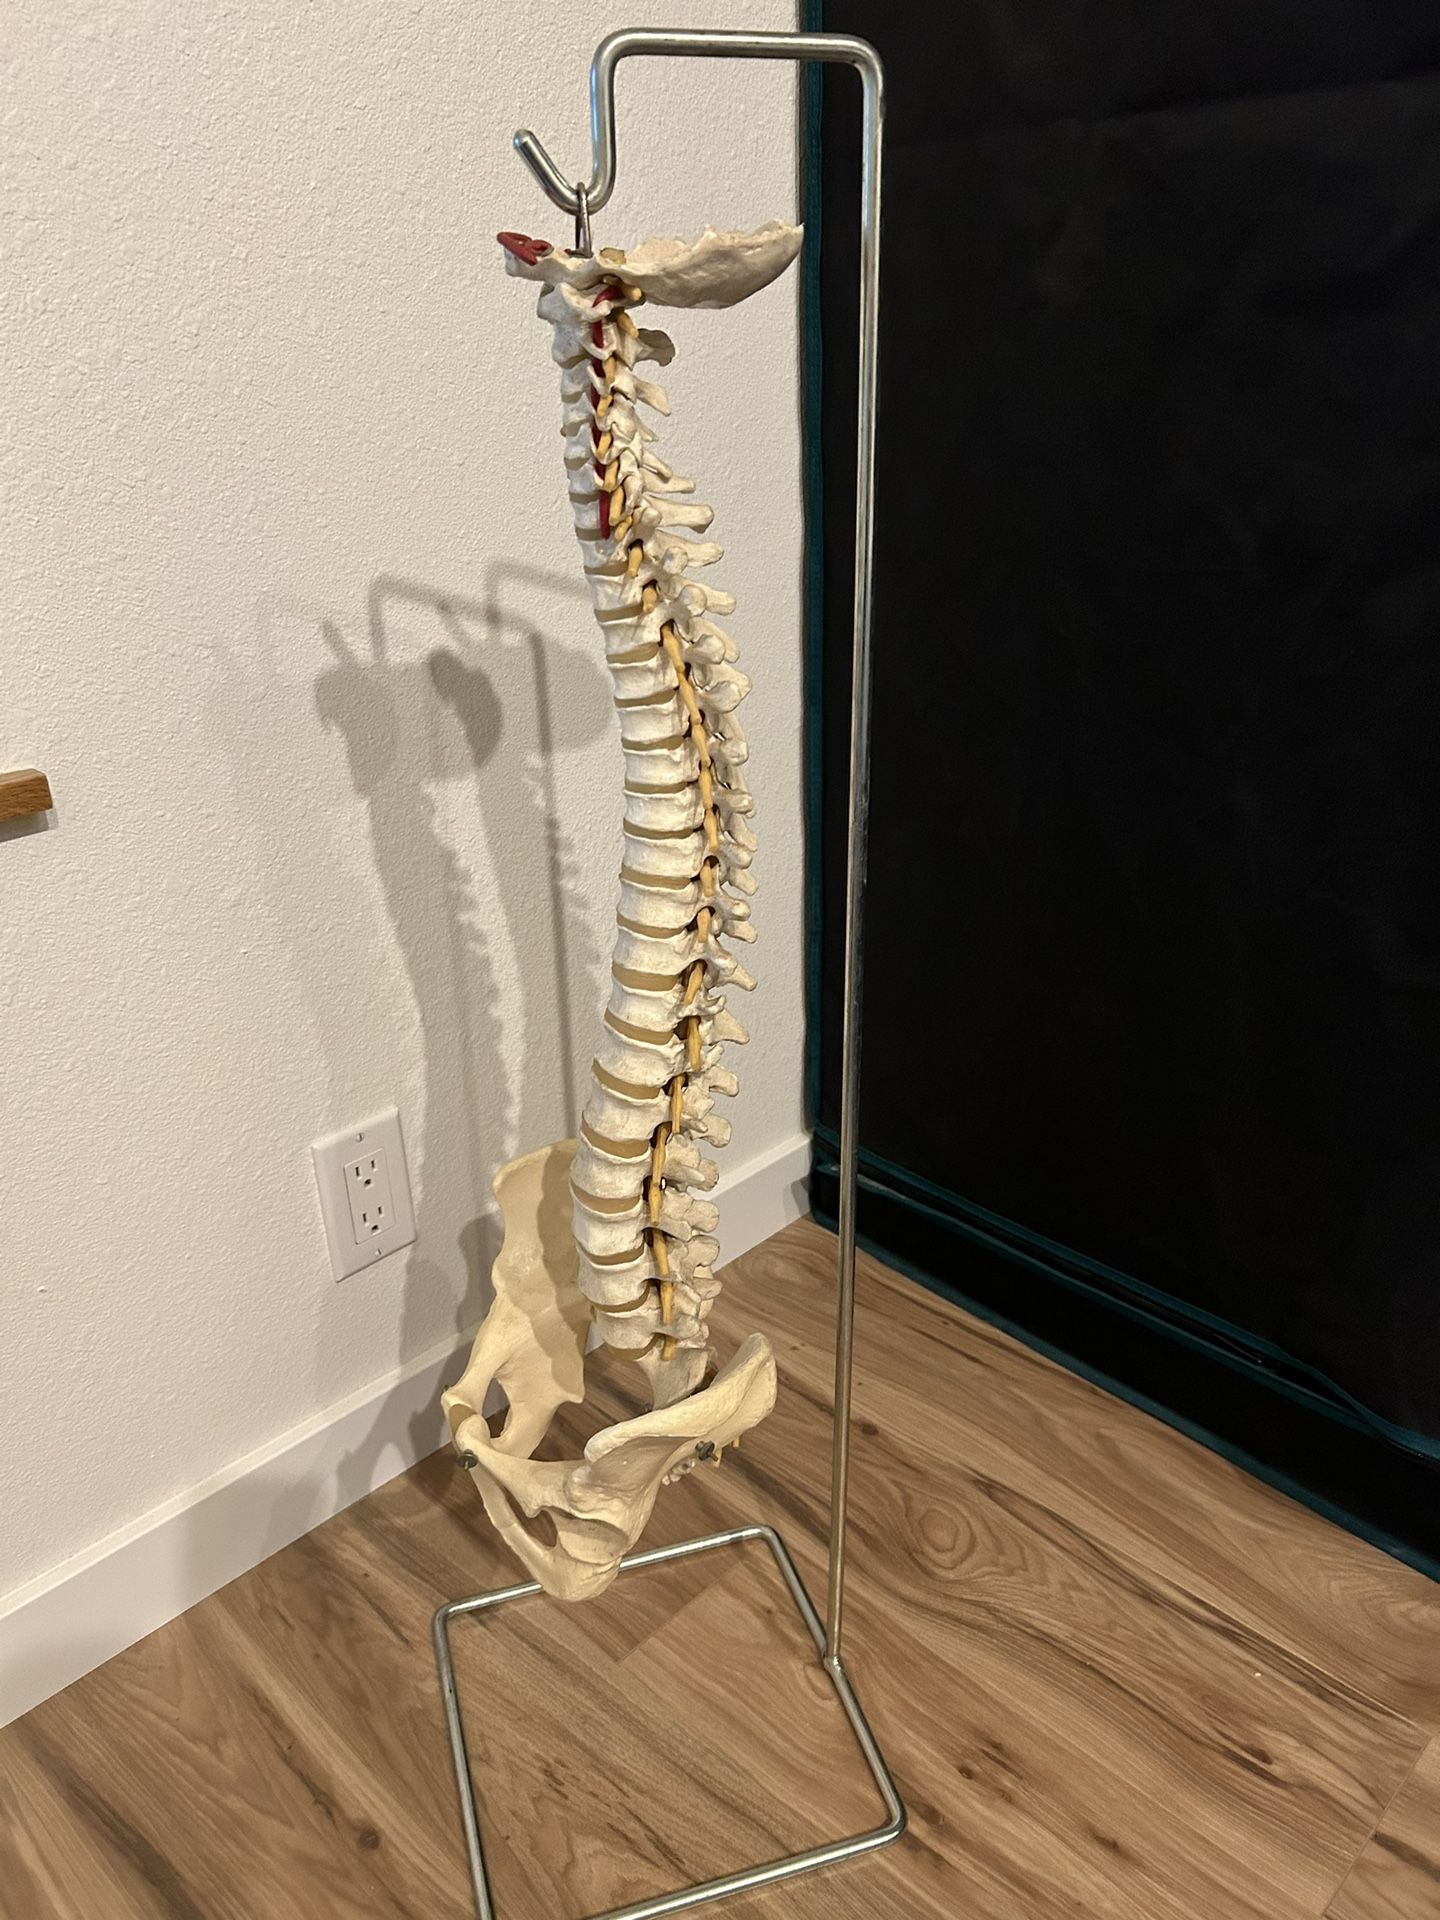 Spine Anatomy Model (life Size)